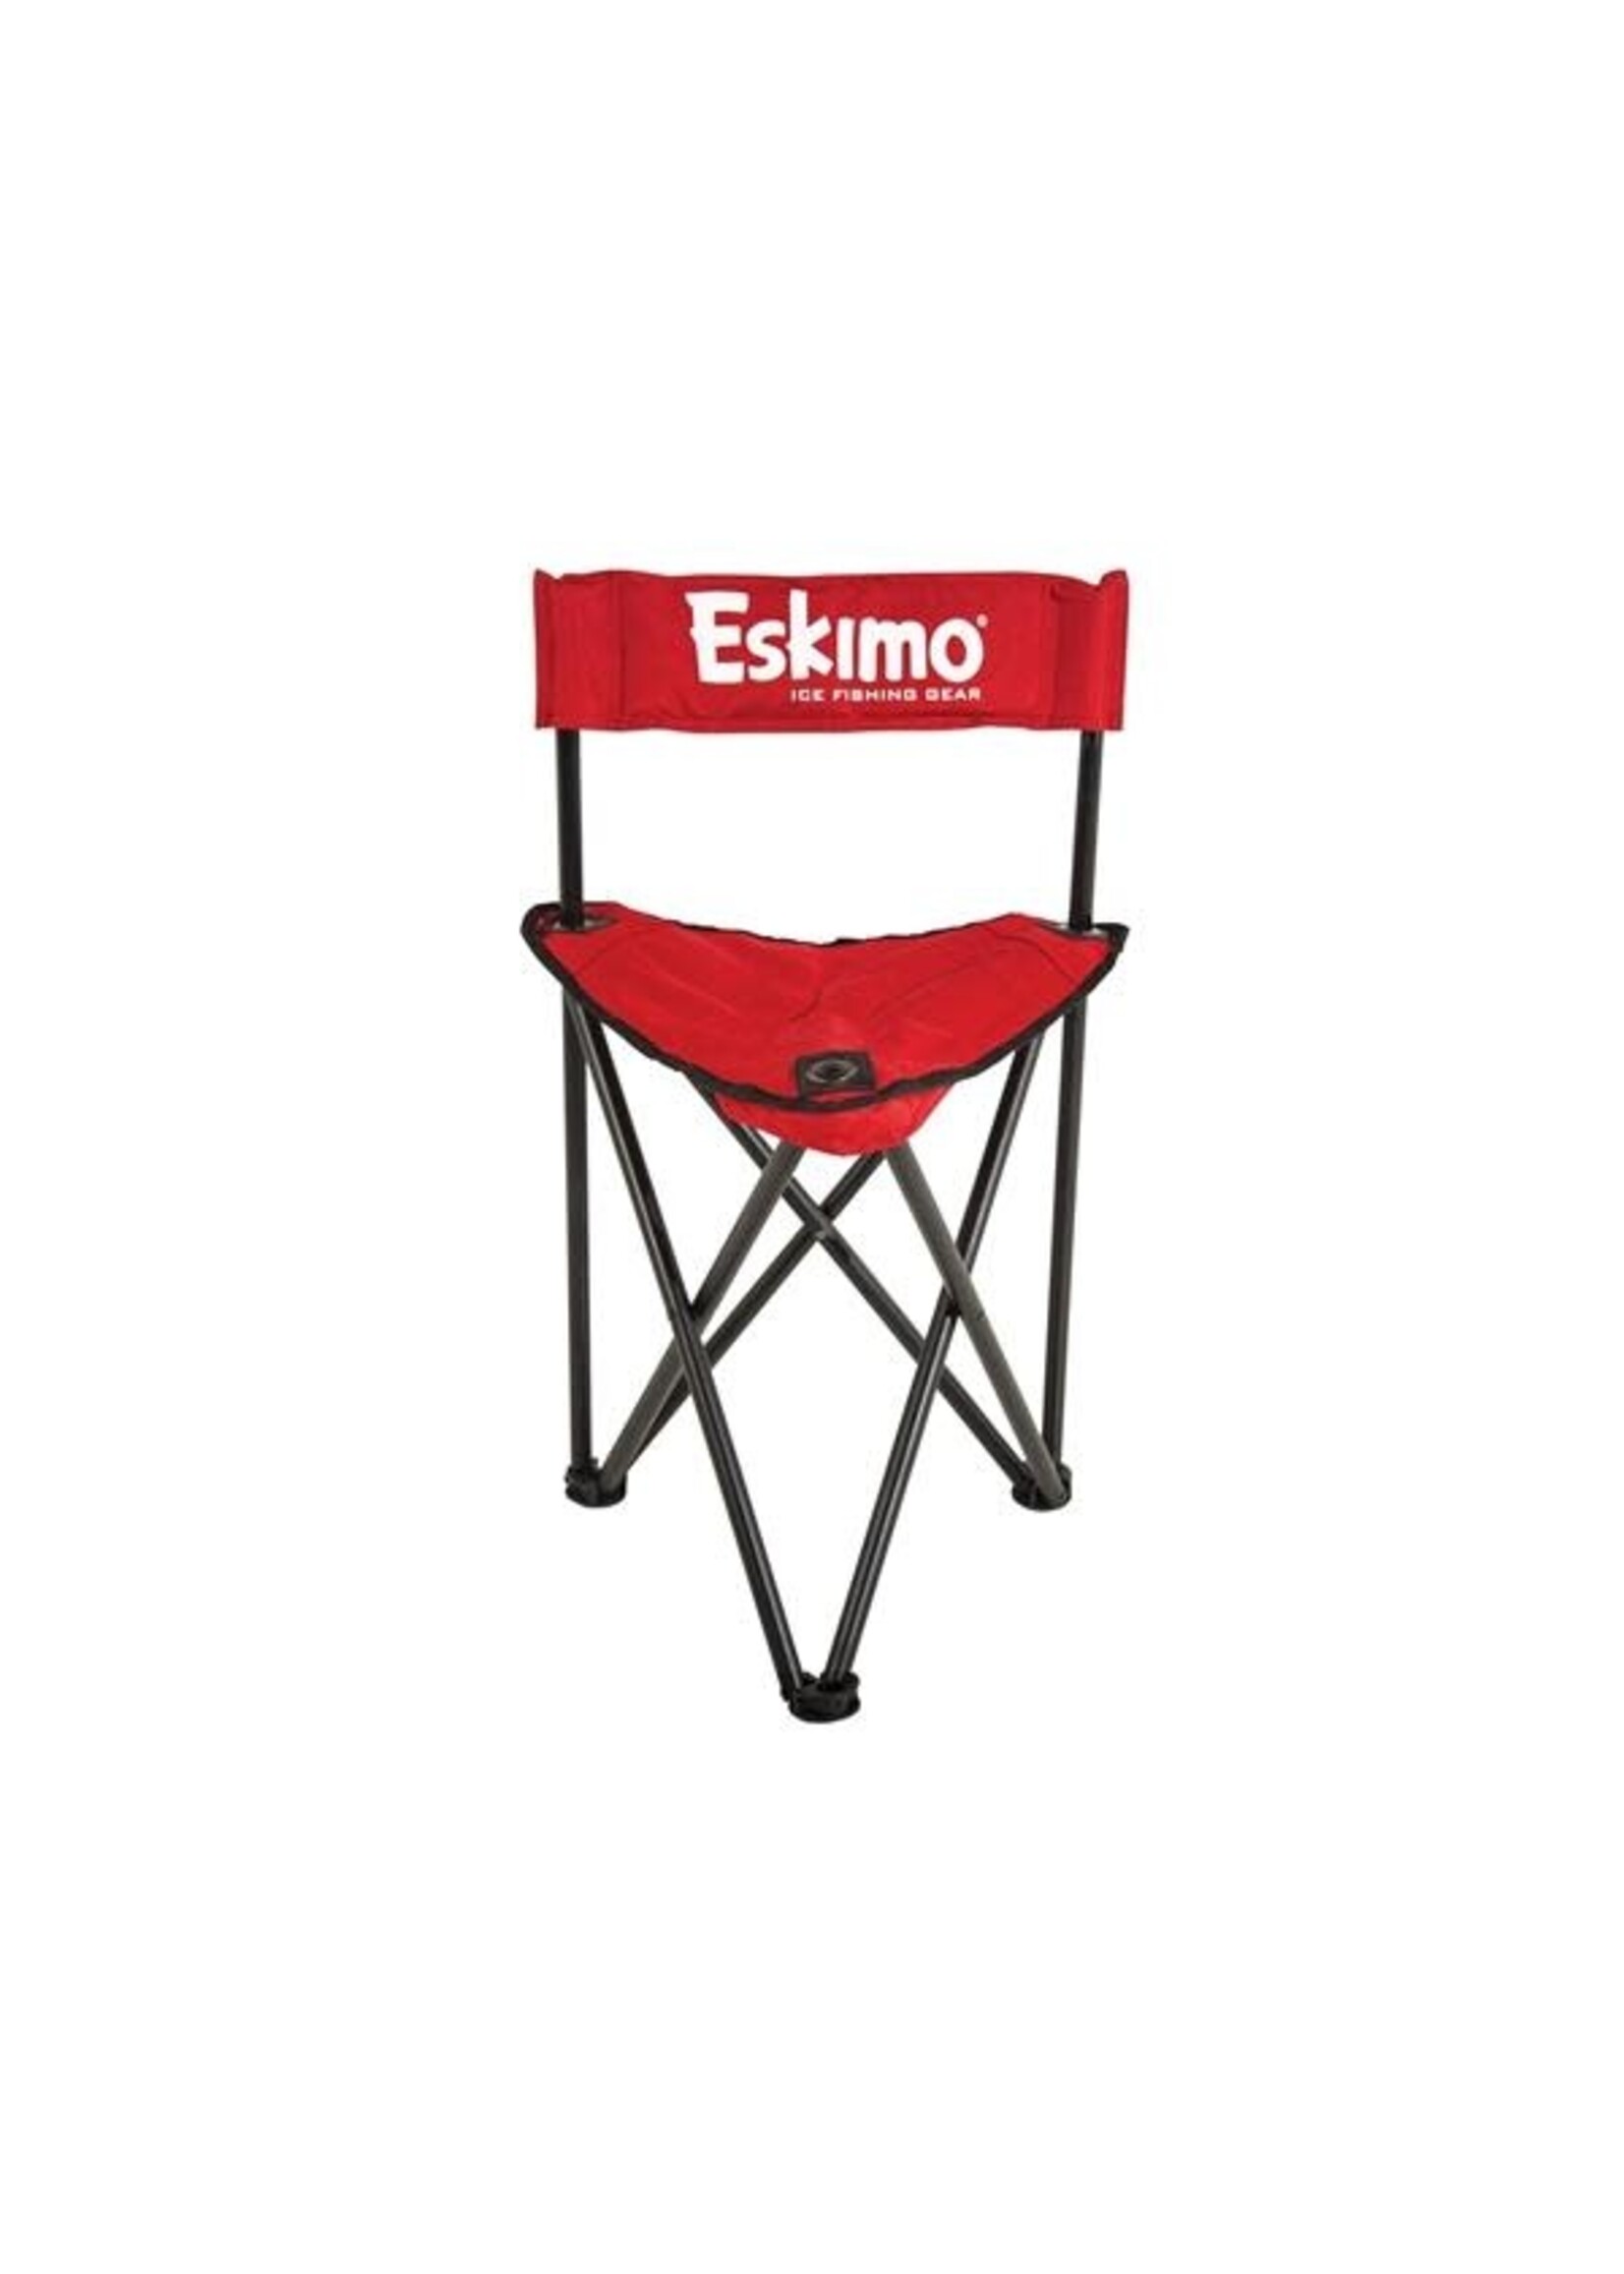 Eskimo Eskimo Folding Ice Chair